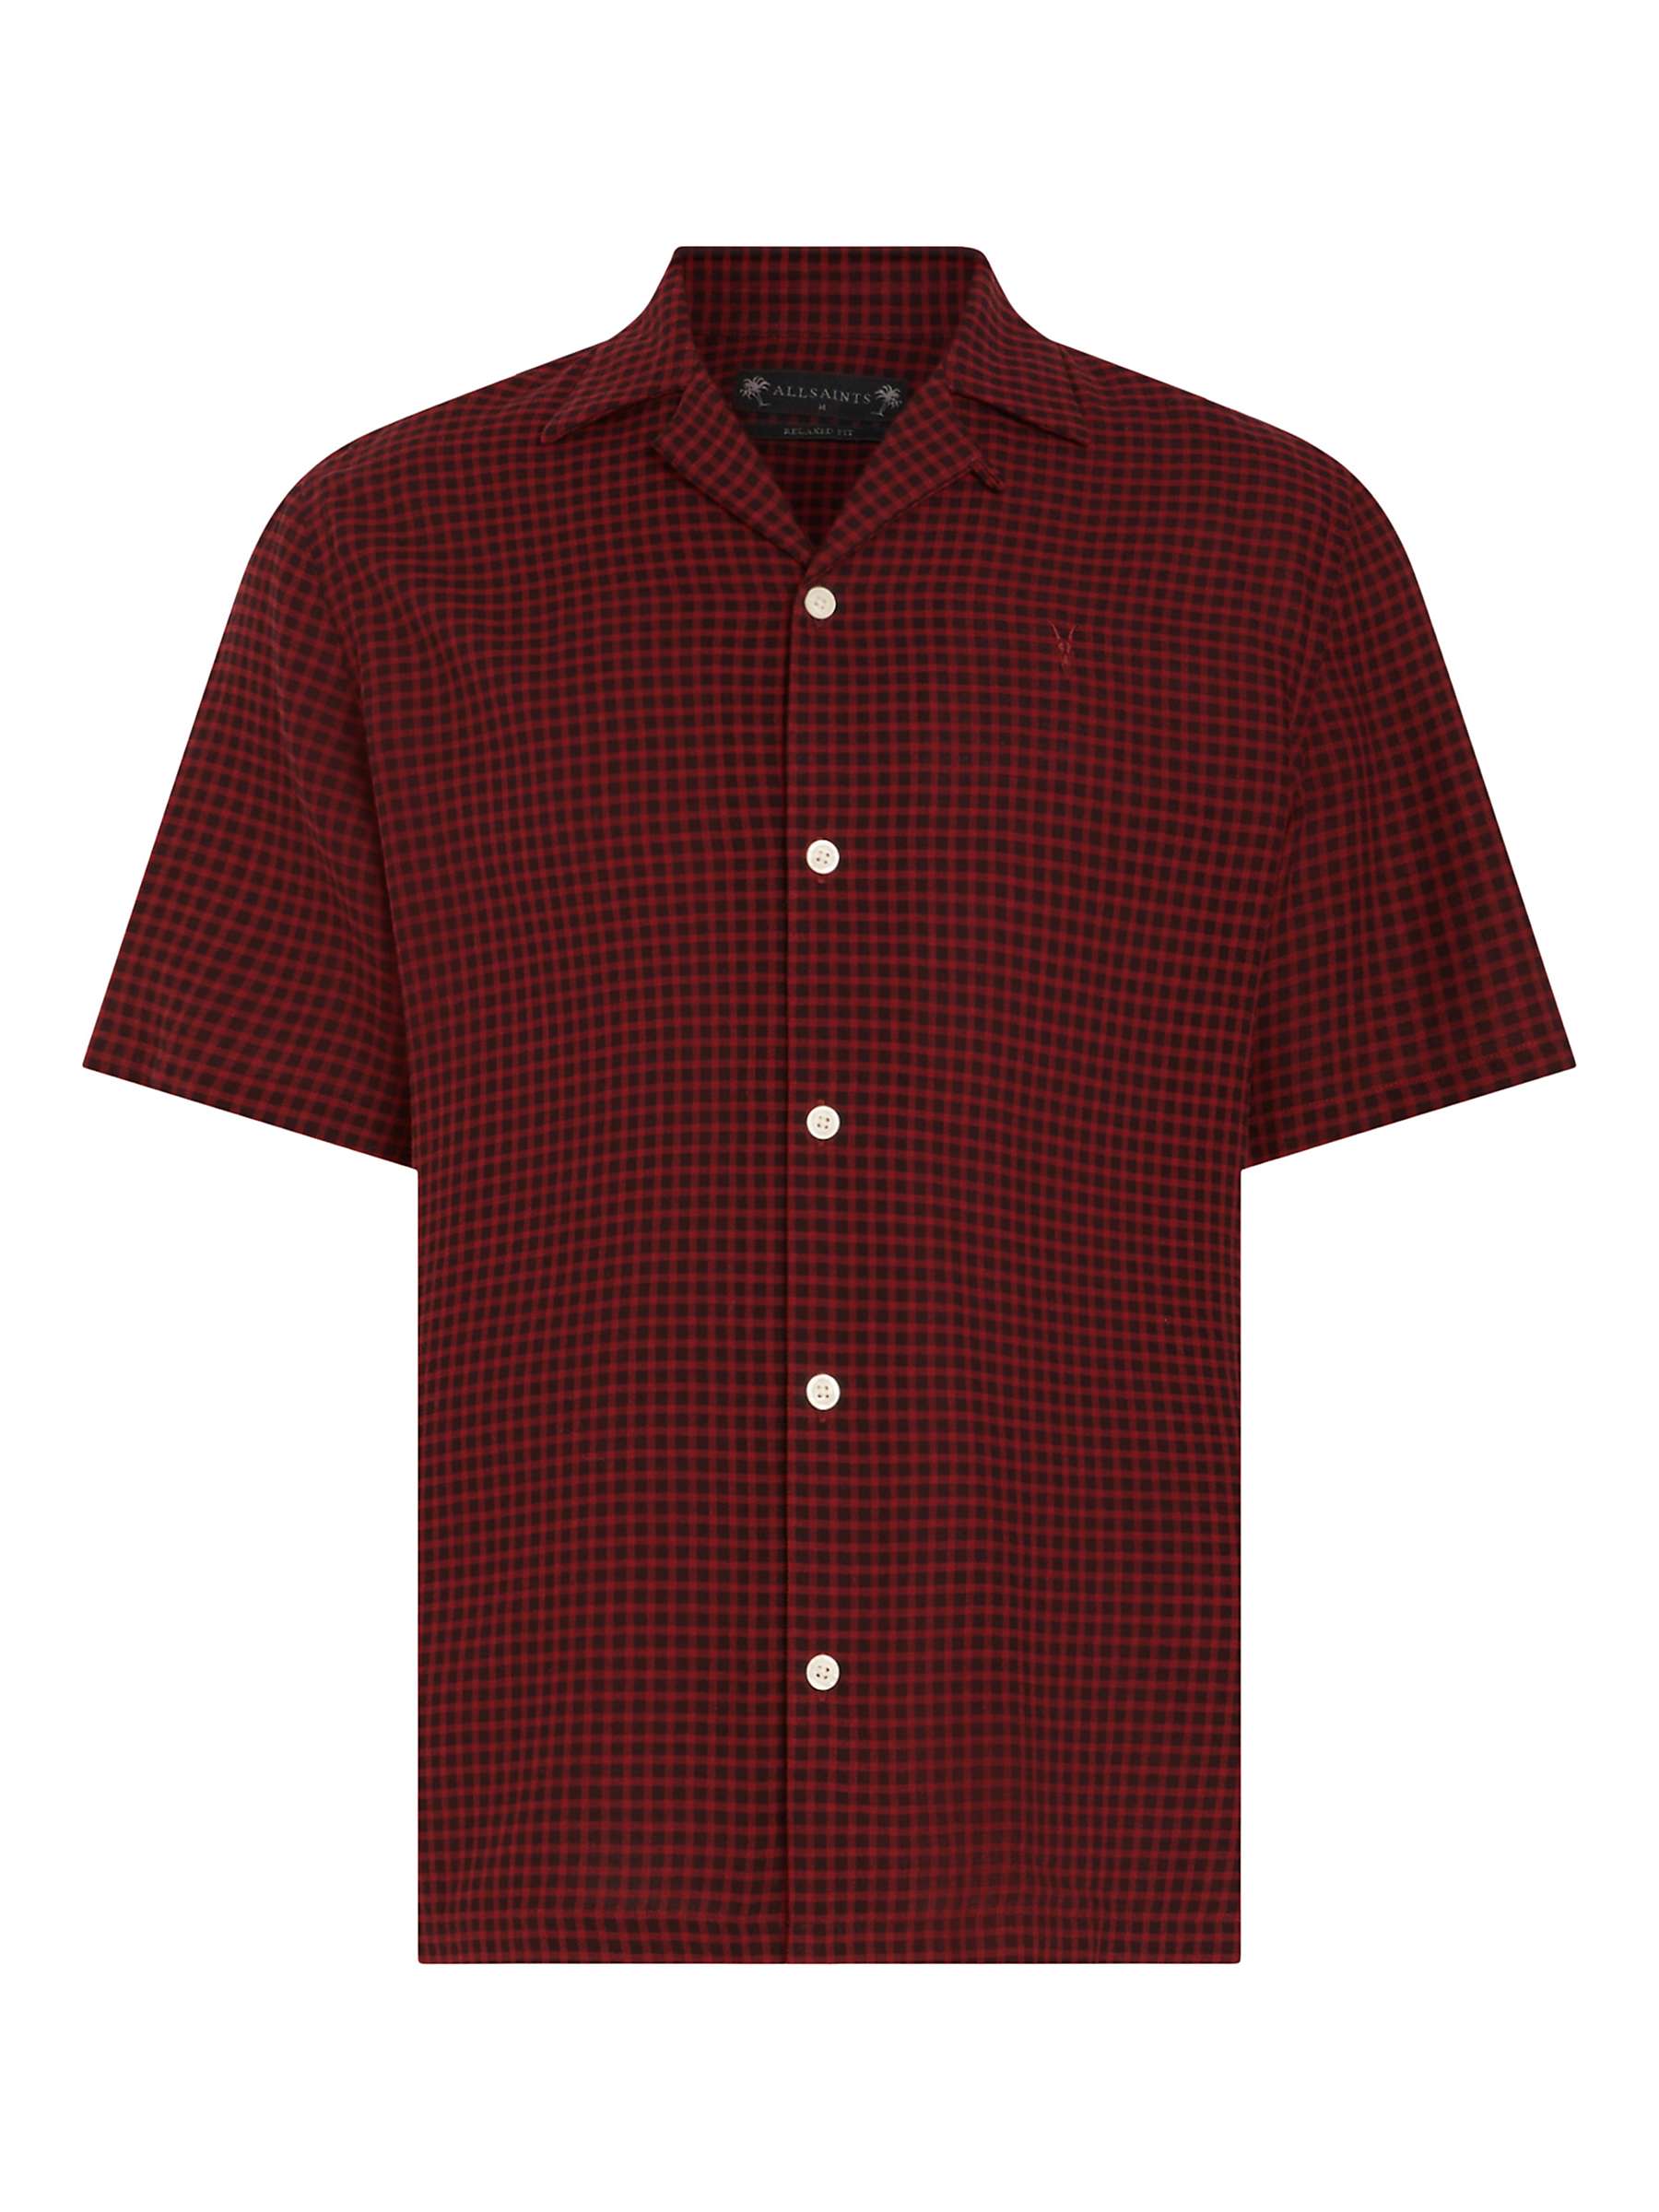 Buy AllSaints Glendale Checked Short Sleeve Shirt Online at johnlewis.com